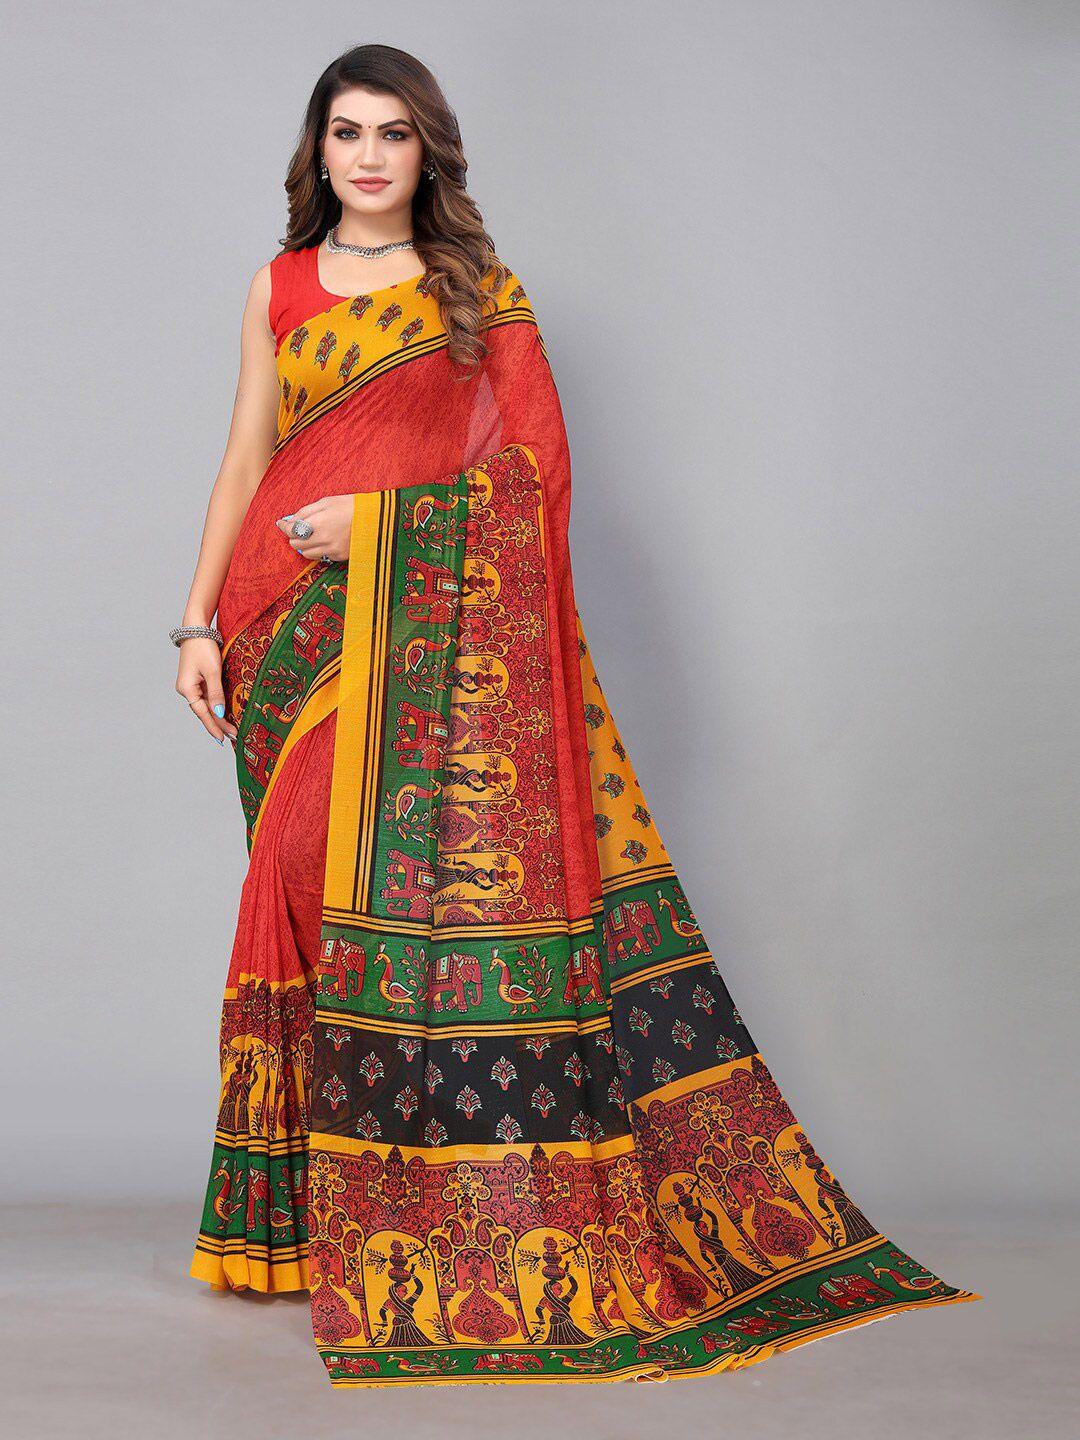 hritika red & yellow ethnic motifs pure georgette saree